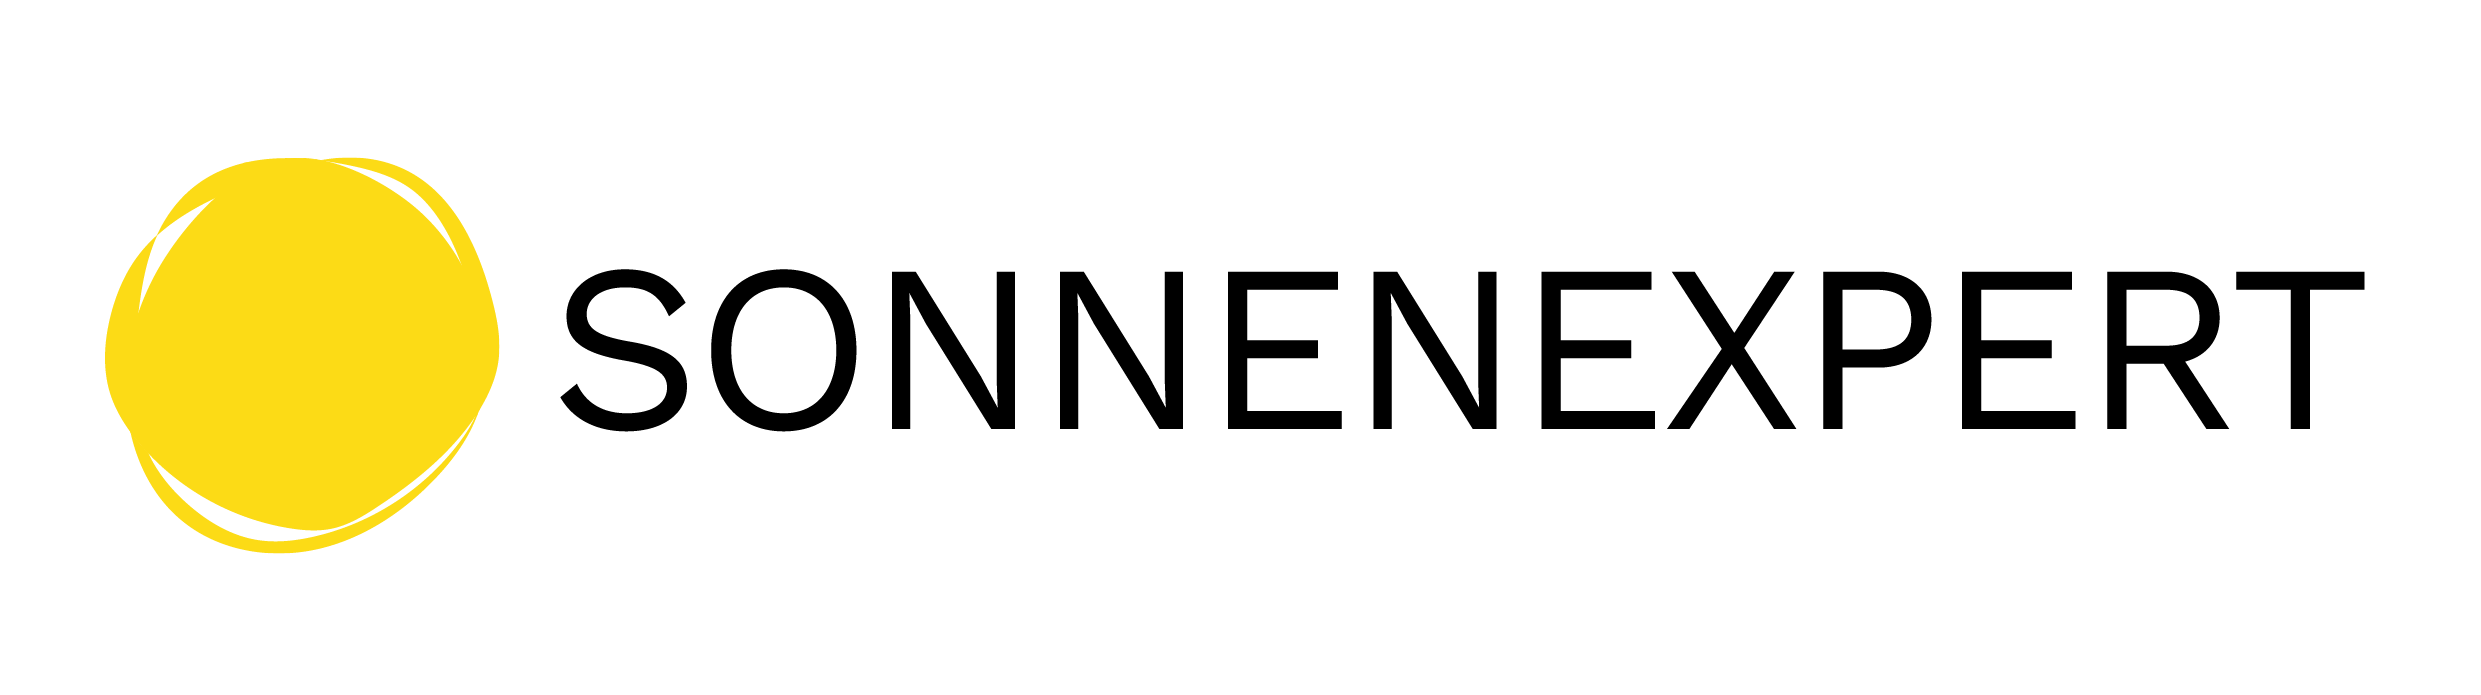 SONNENEXPERT Logo farbig